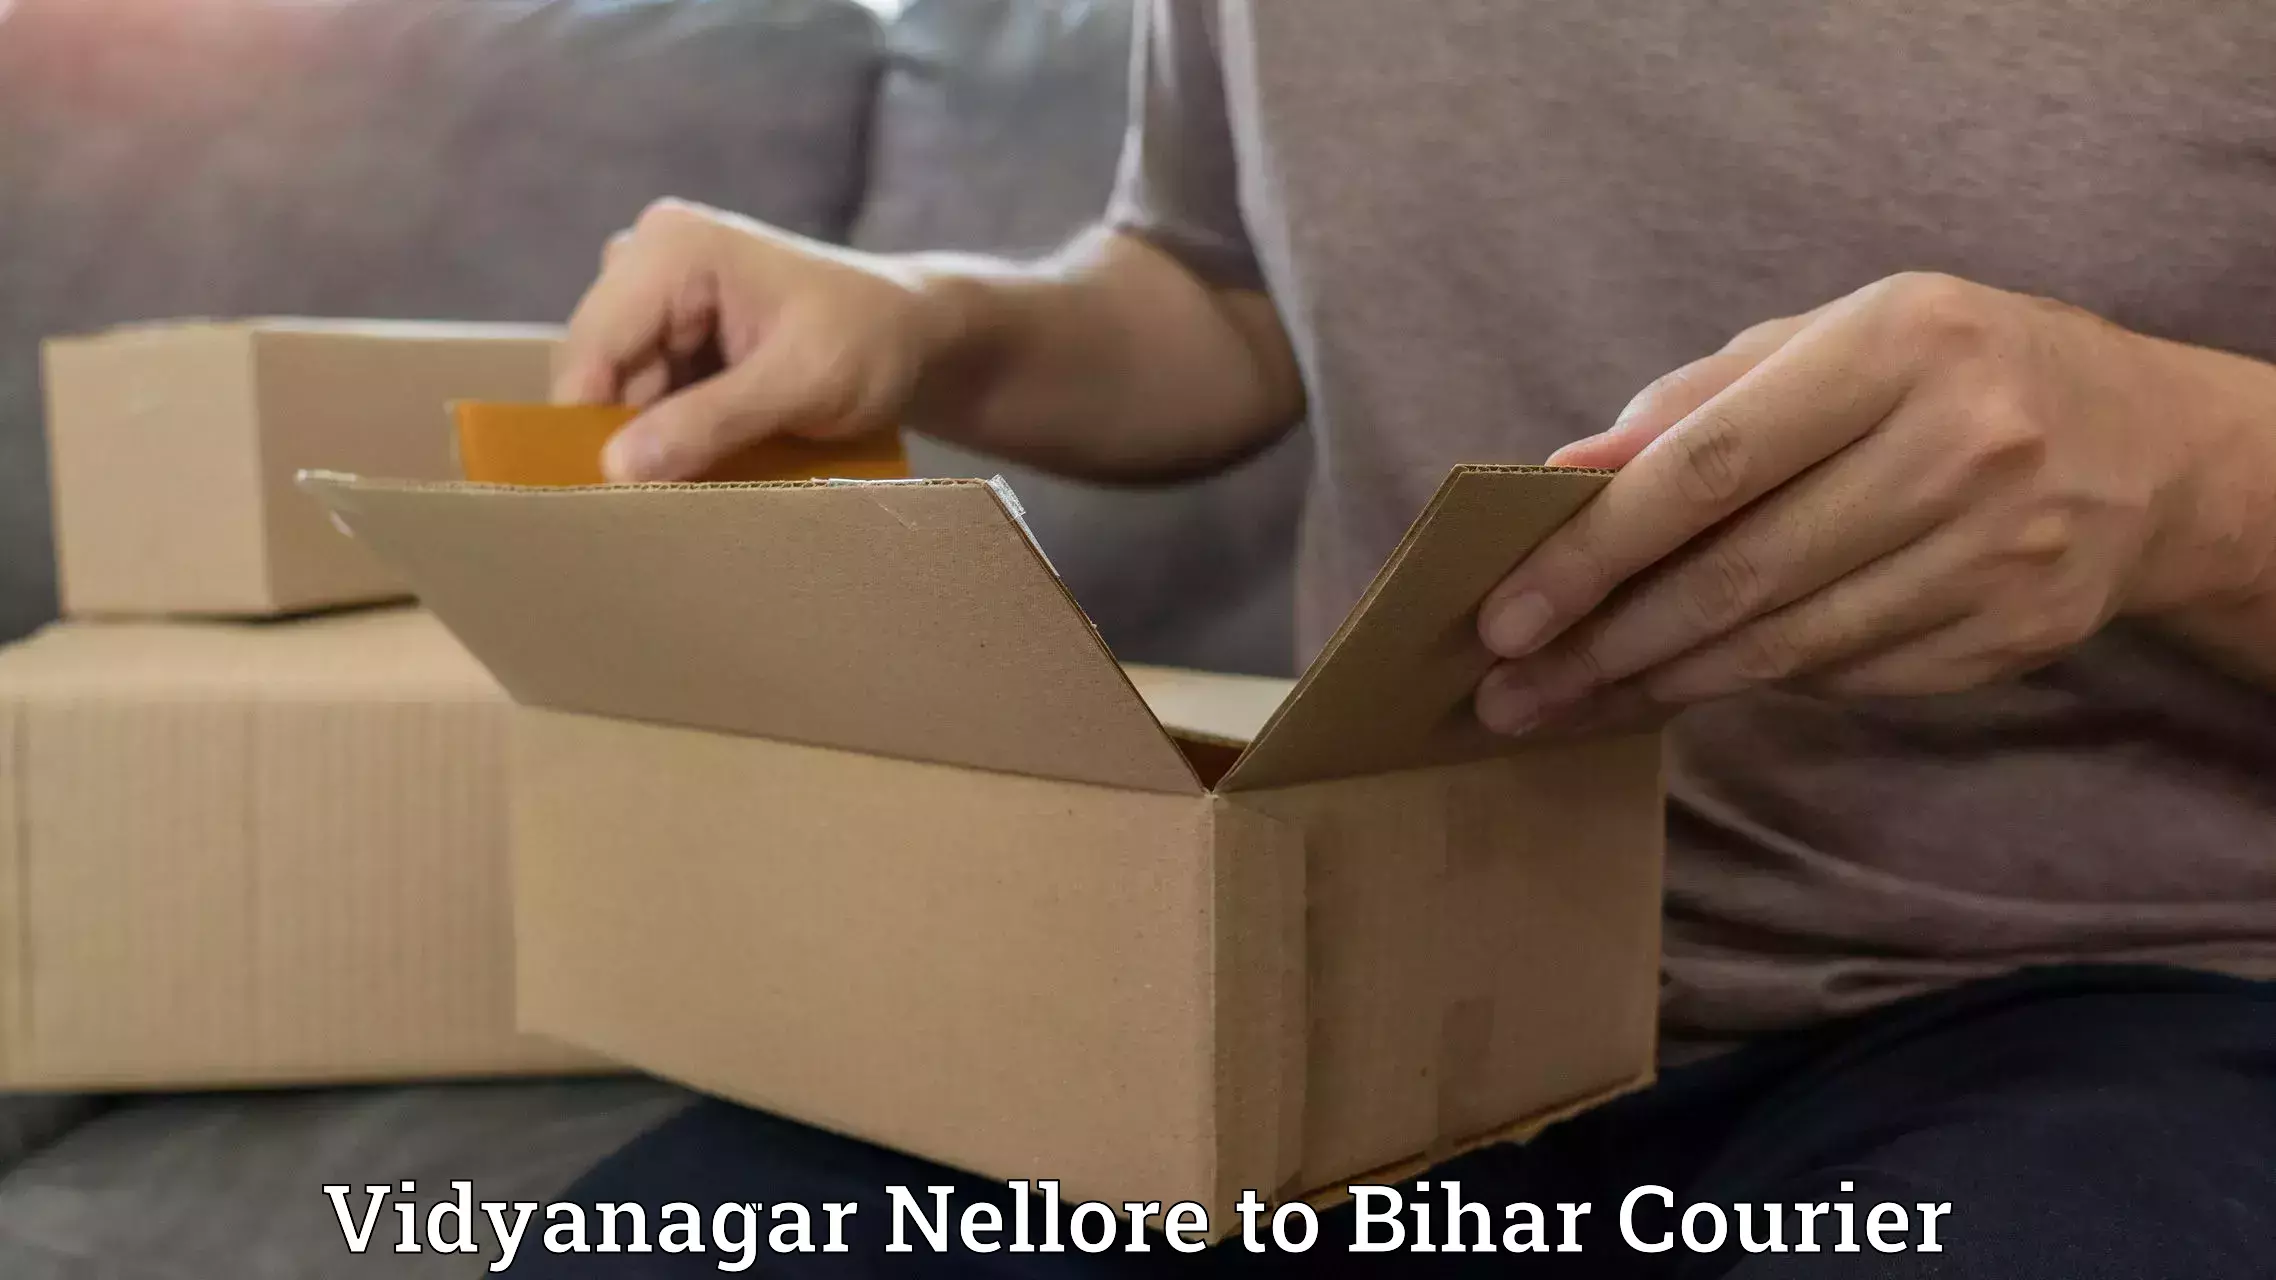 Courier app Vidyanagar Nellore to Aurangabad Bihar